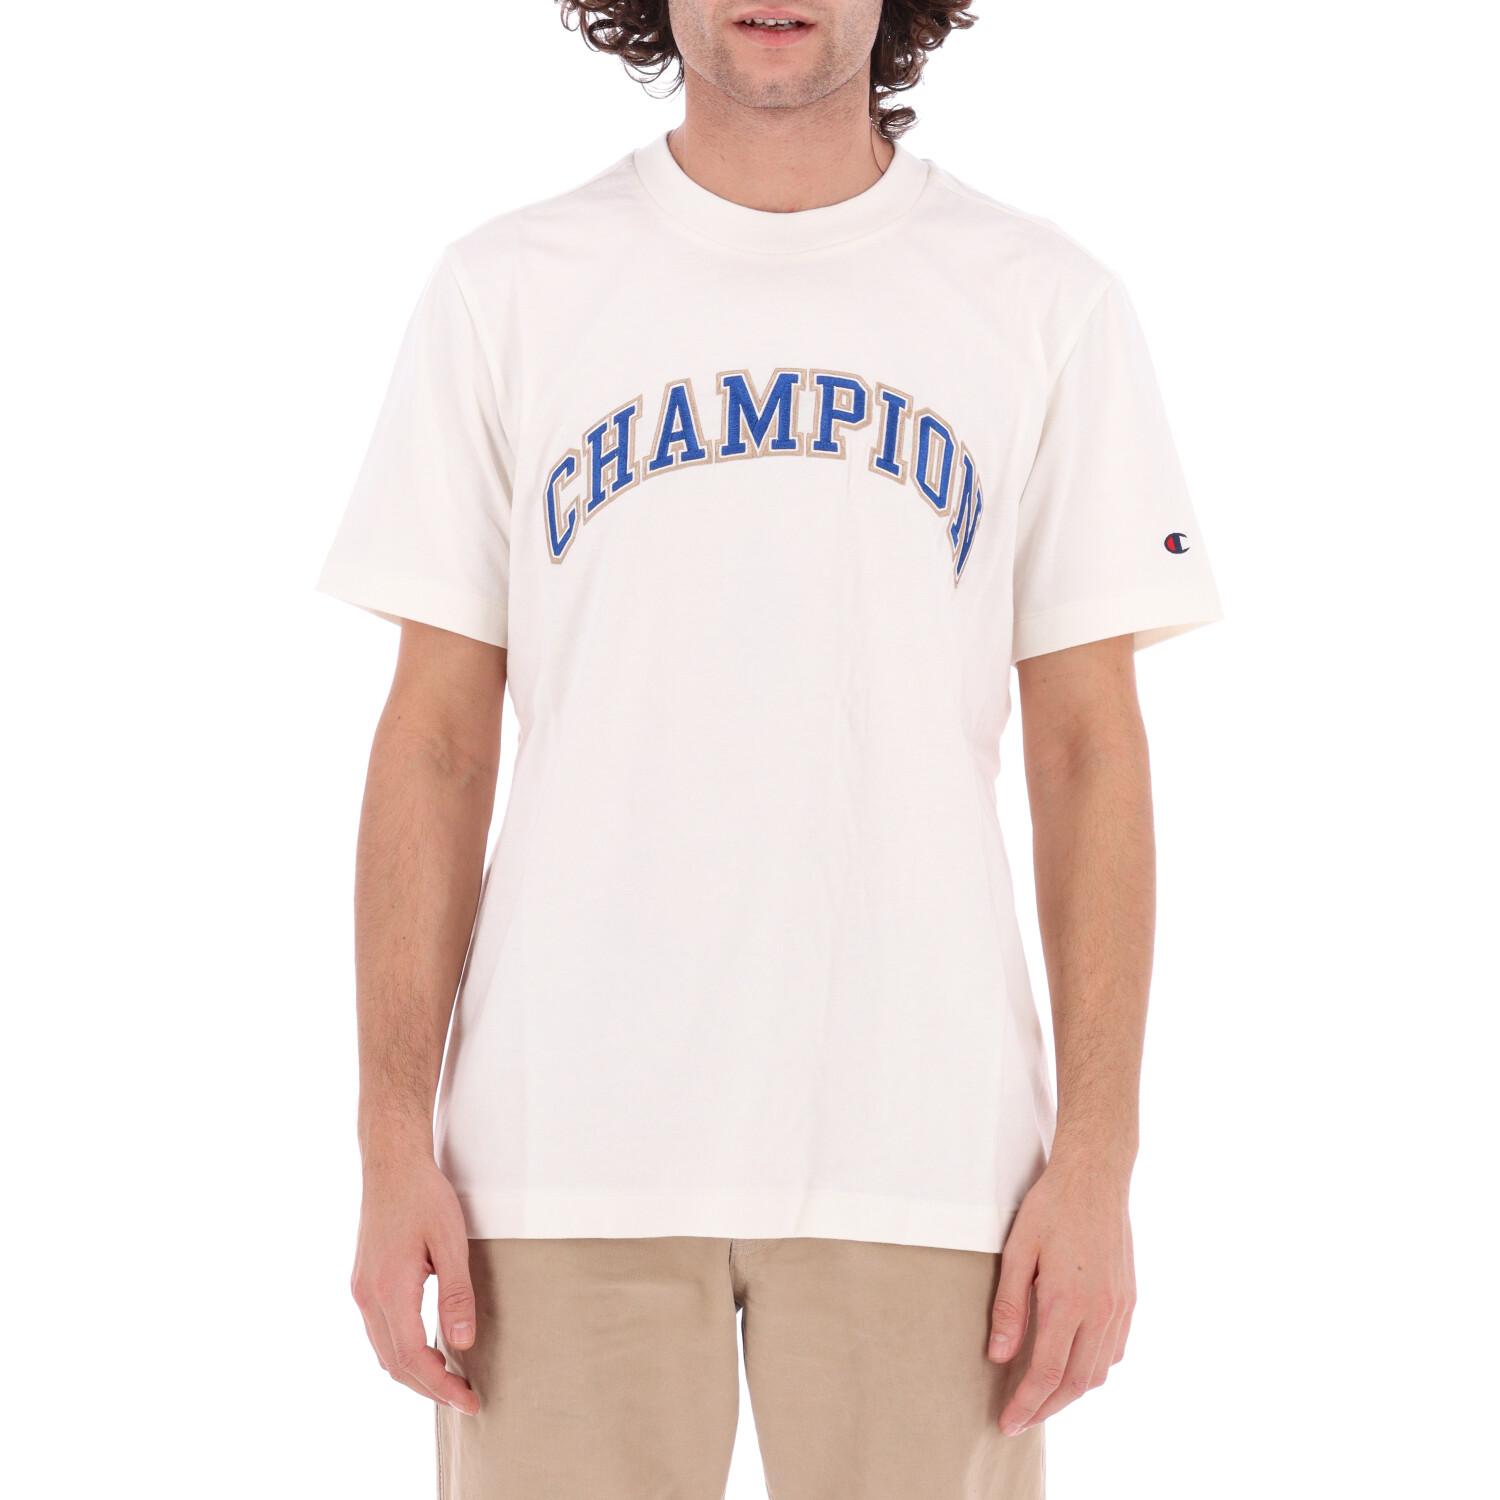 Champion Crewnwck T-shirt White